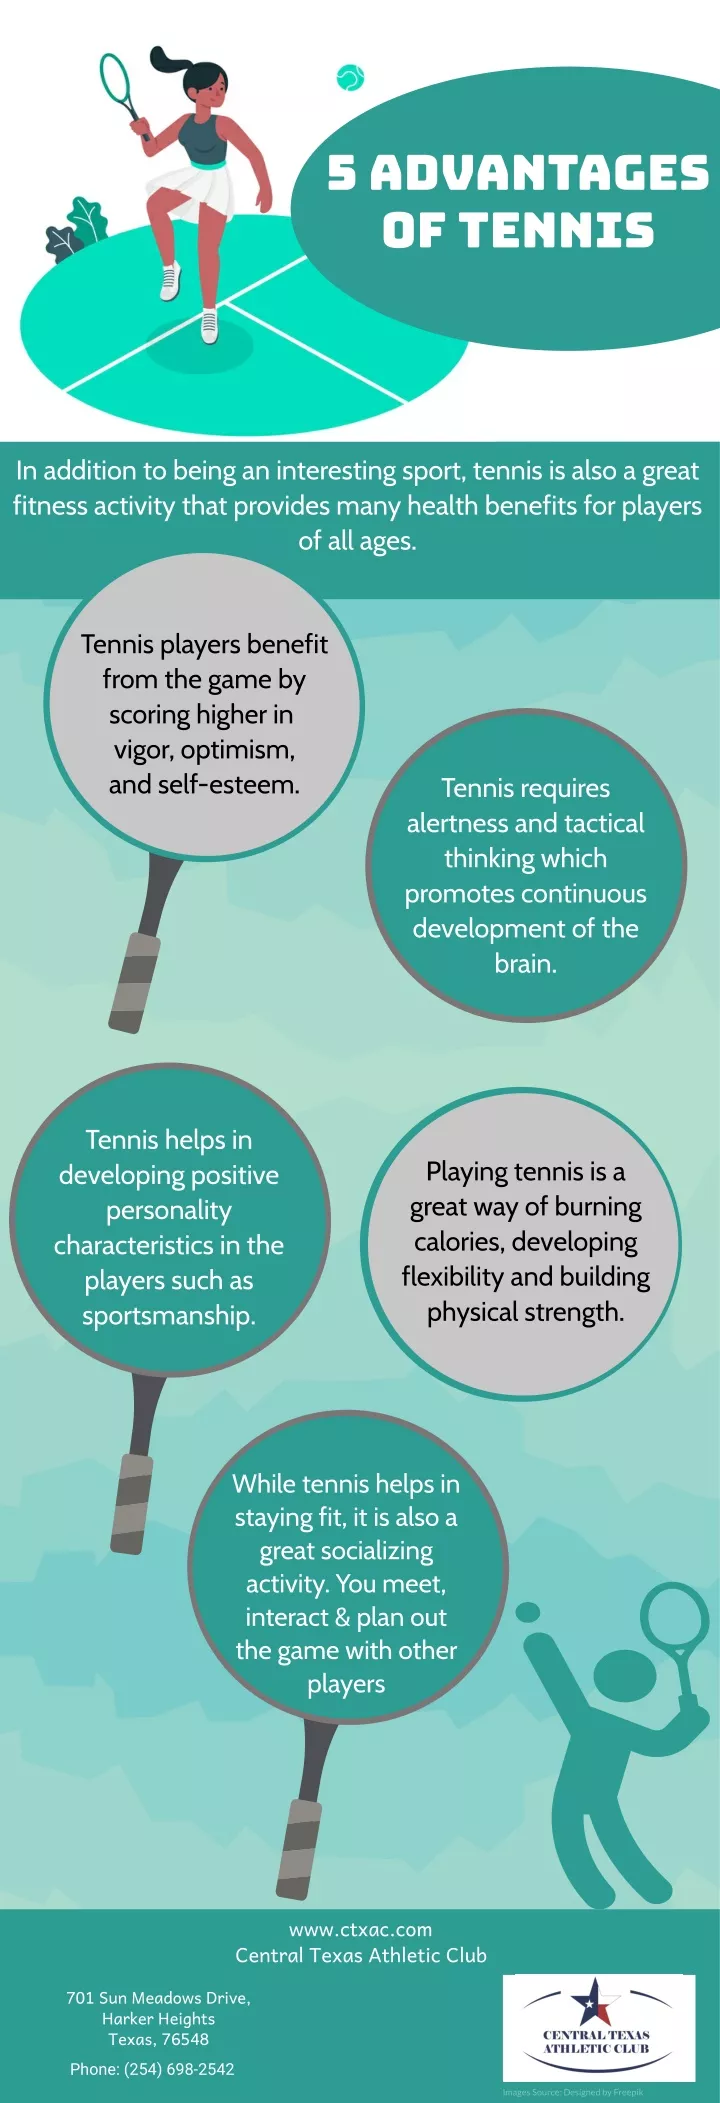 5 advantages of tennis